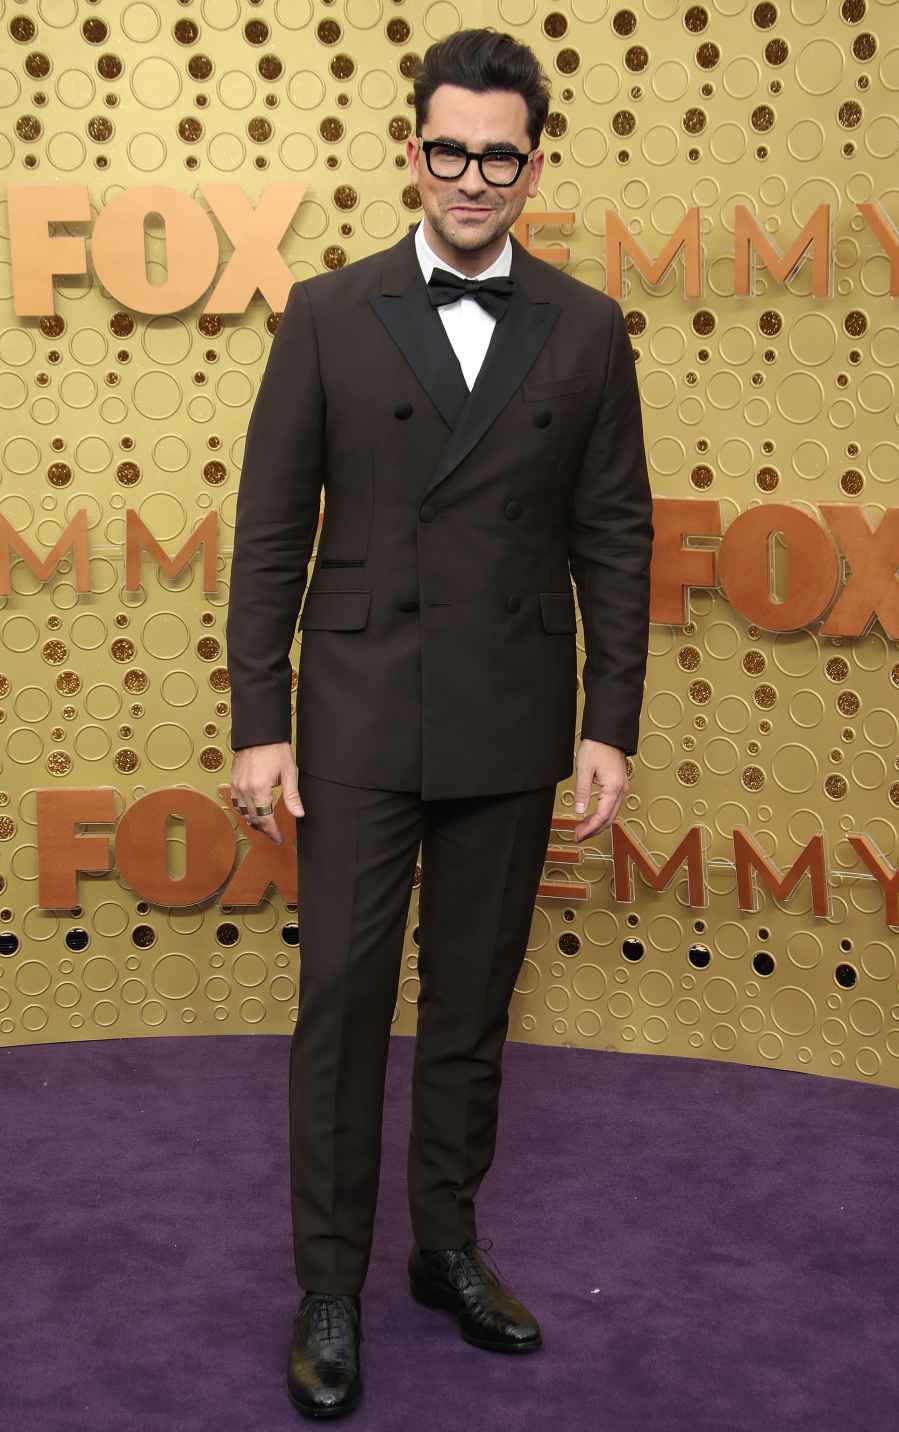 Emmys 2019 Hottest Hunks - Daniel Levy